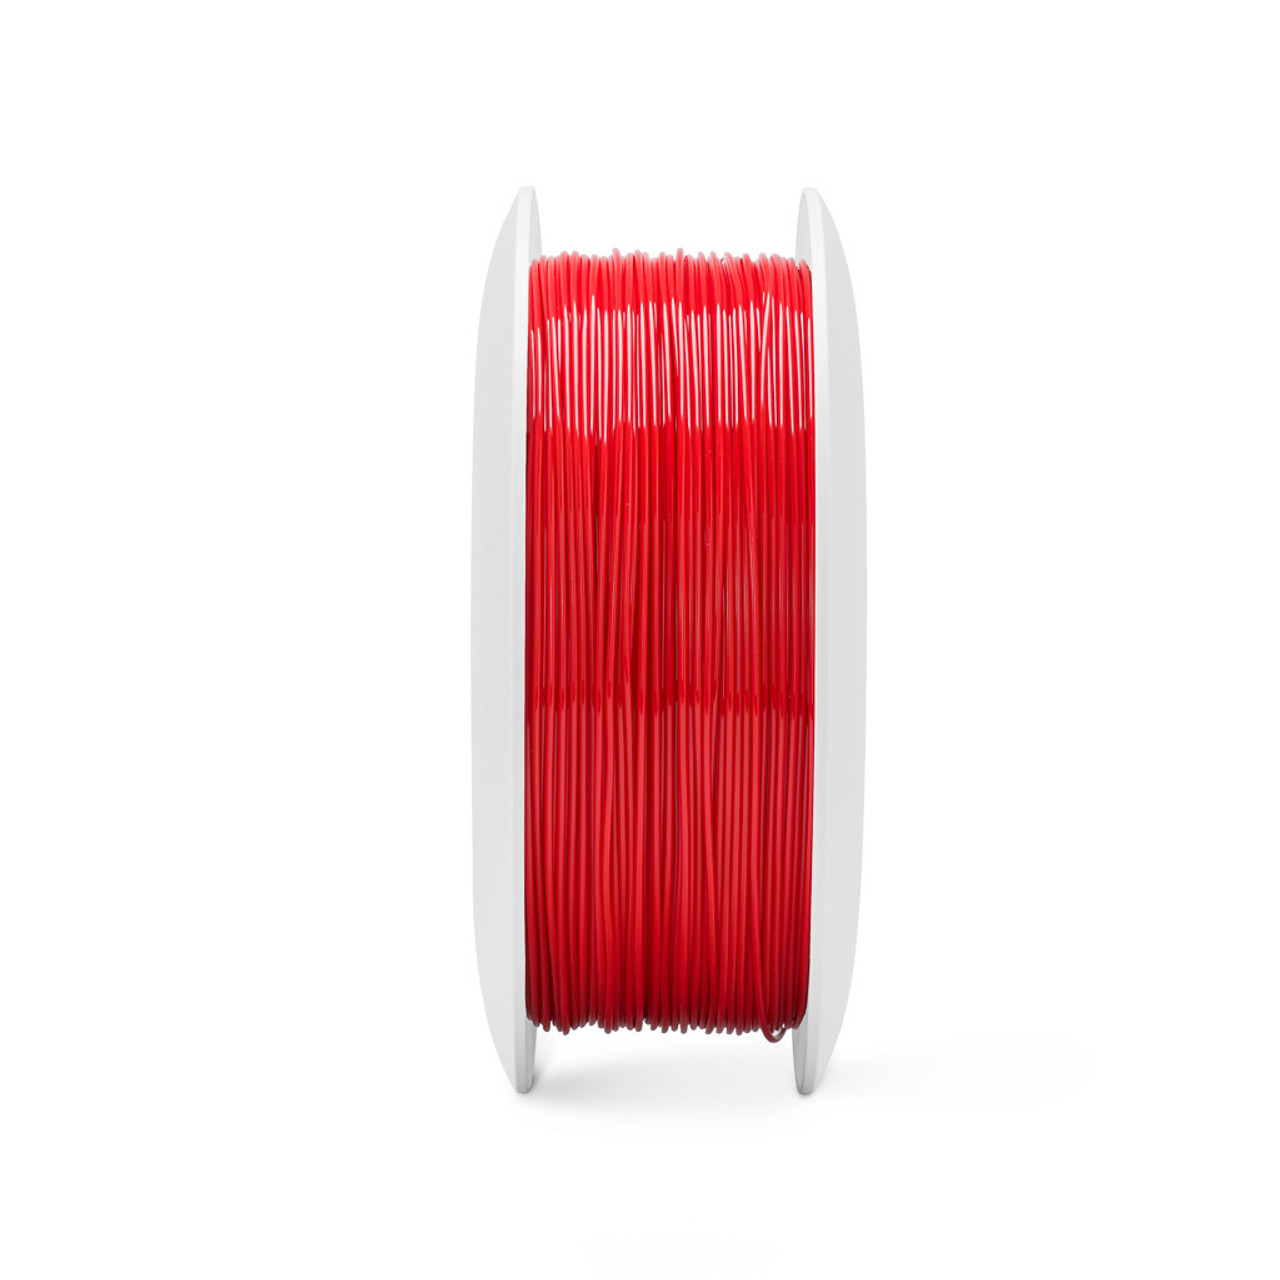 Fiberlogy ABS Red 2.85mm 3D Printing Filament